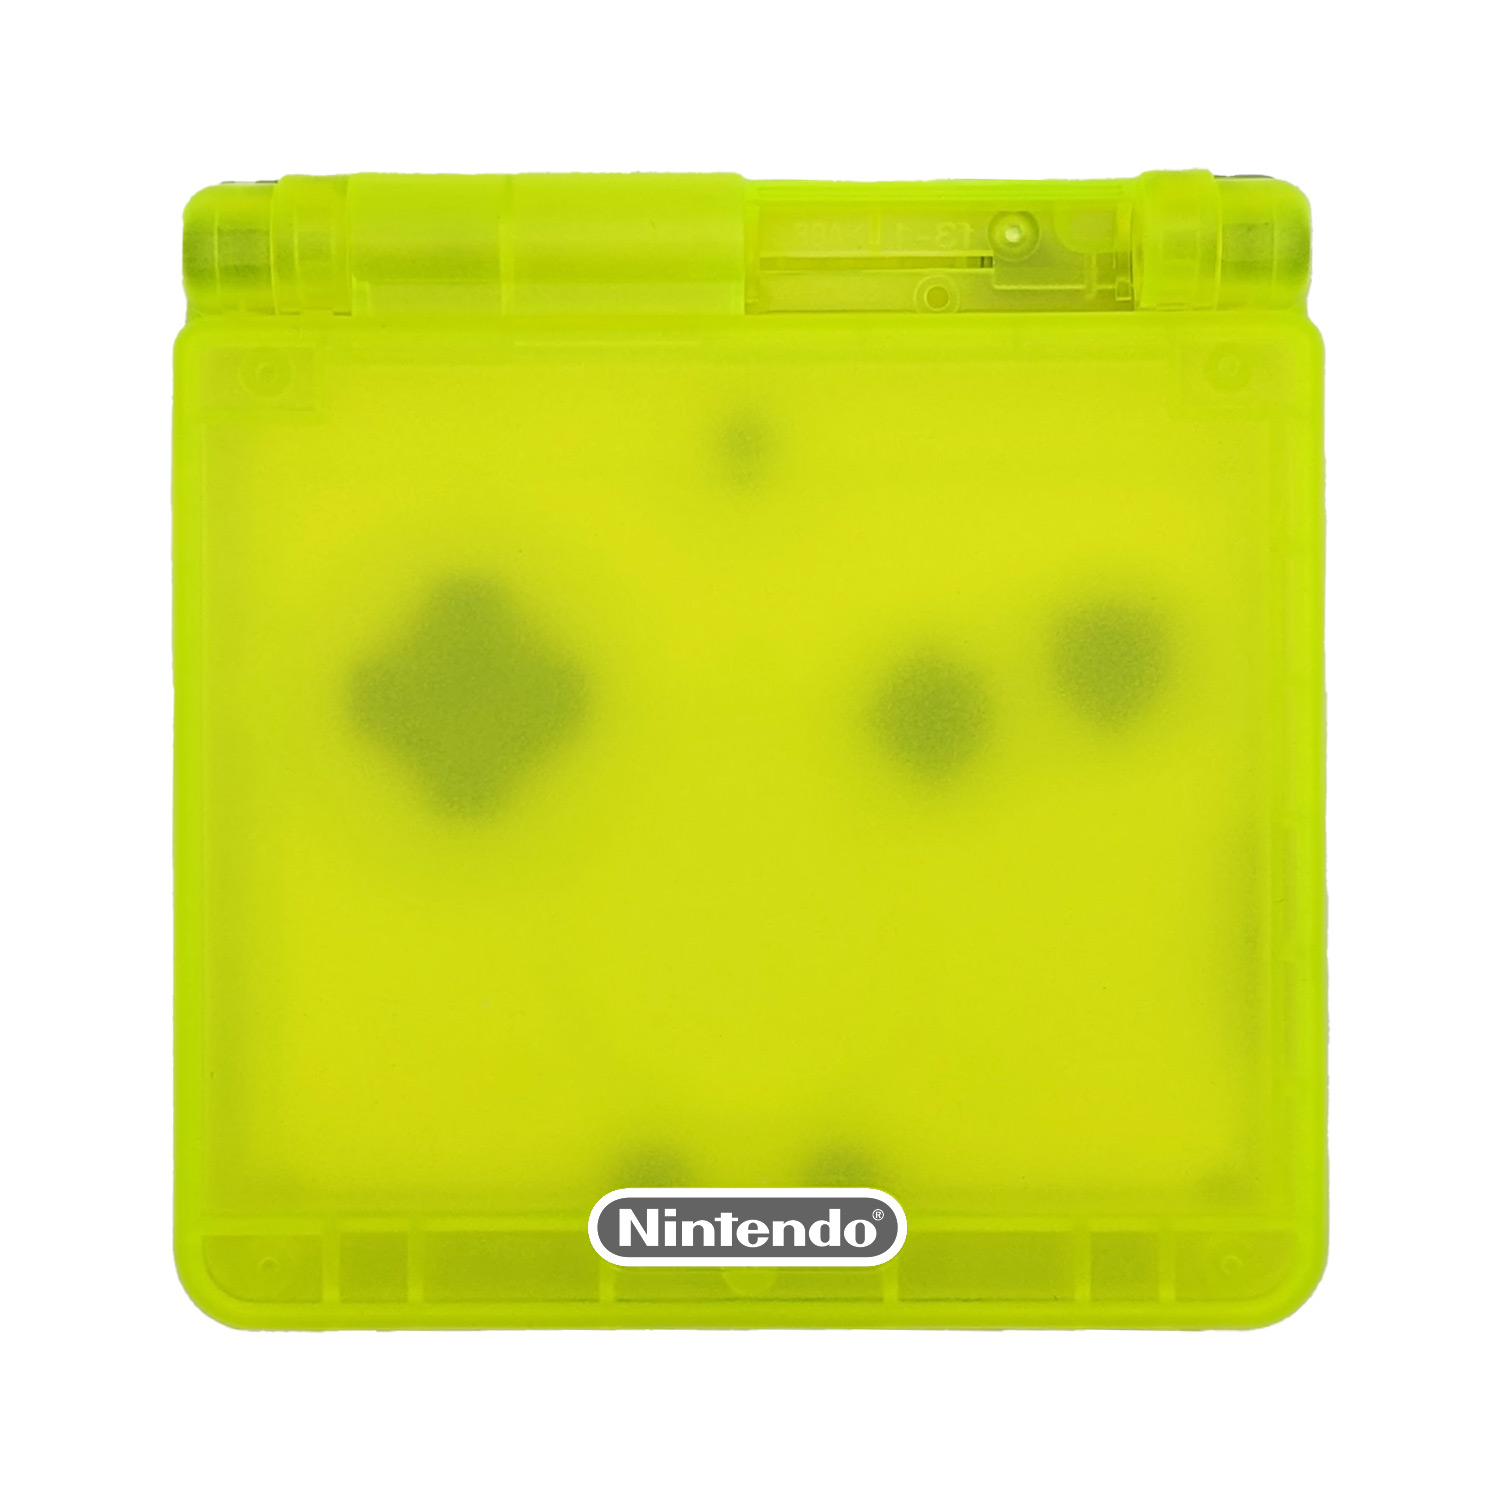 Game Boy Advance SP Gehäuse (Clear Yellow)